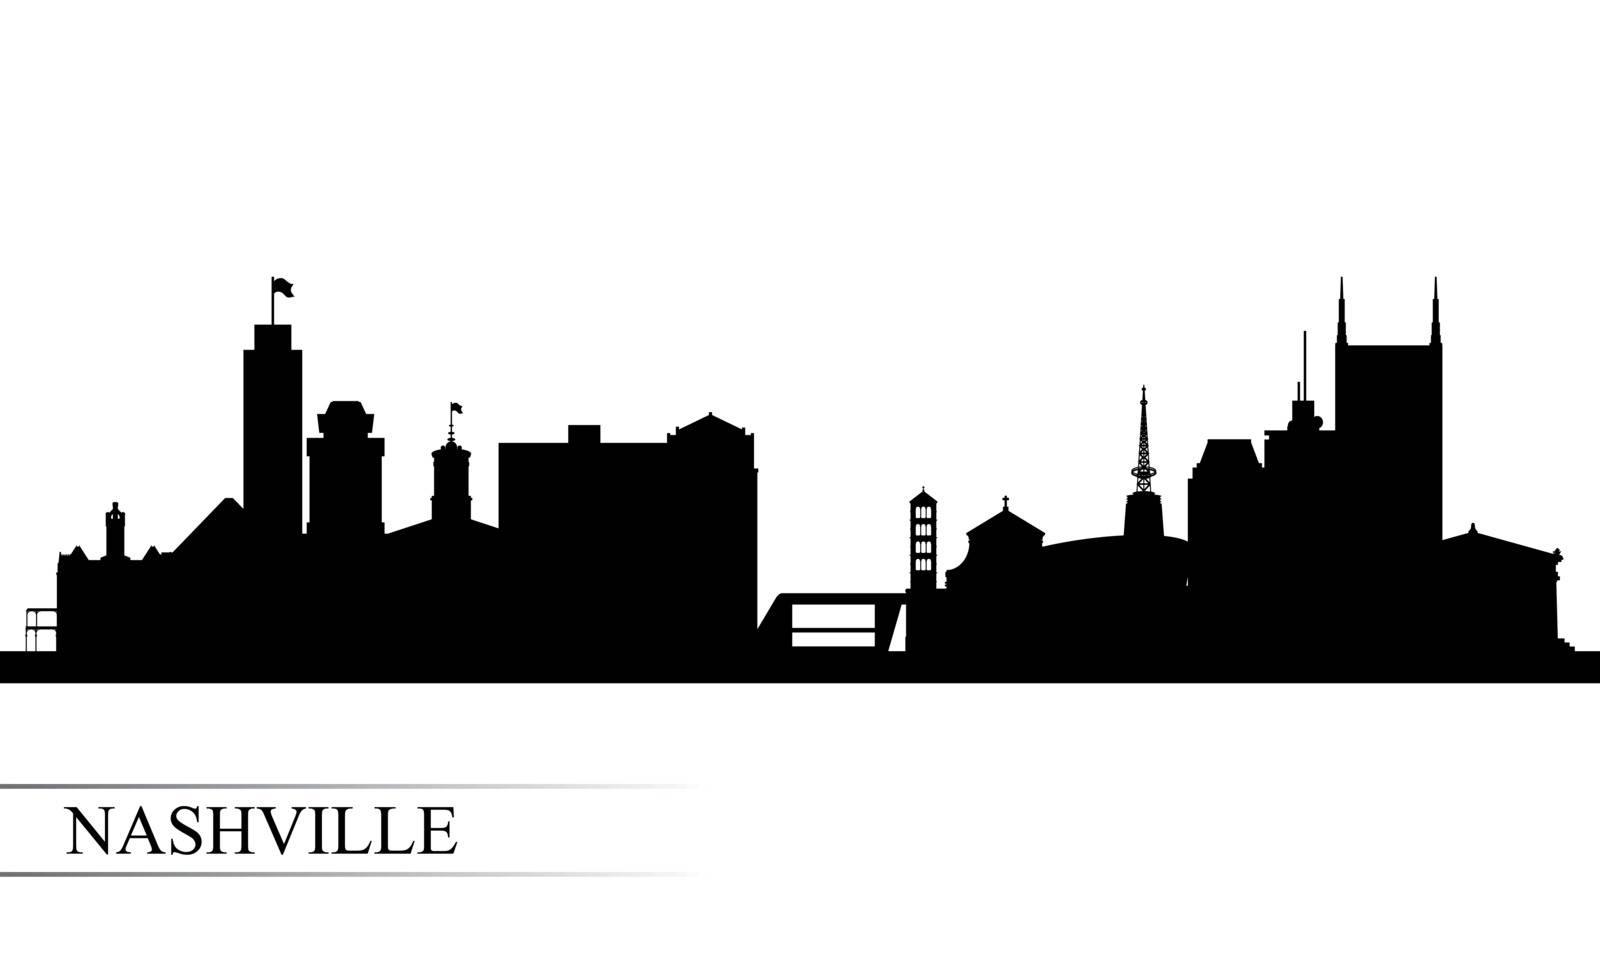 Nashville city skyline silhouette background, vector illustration